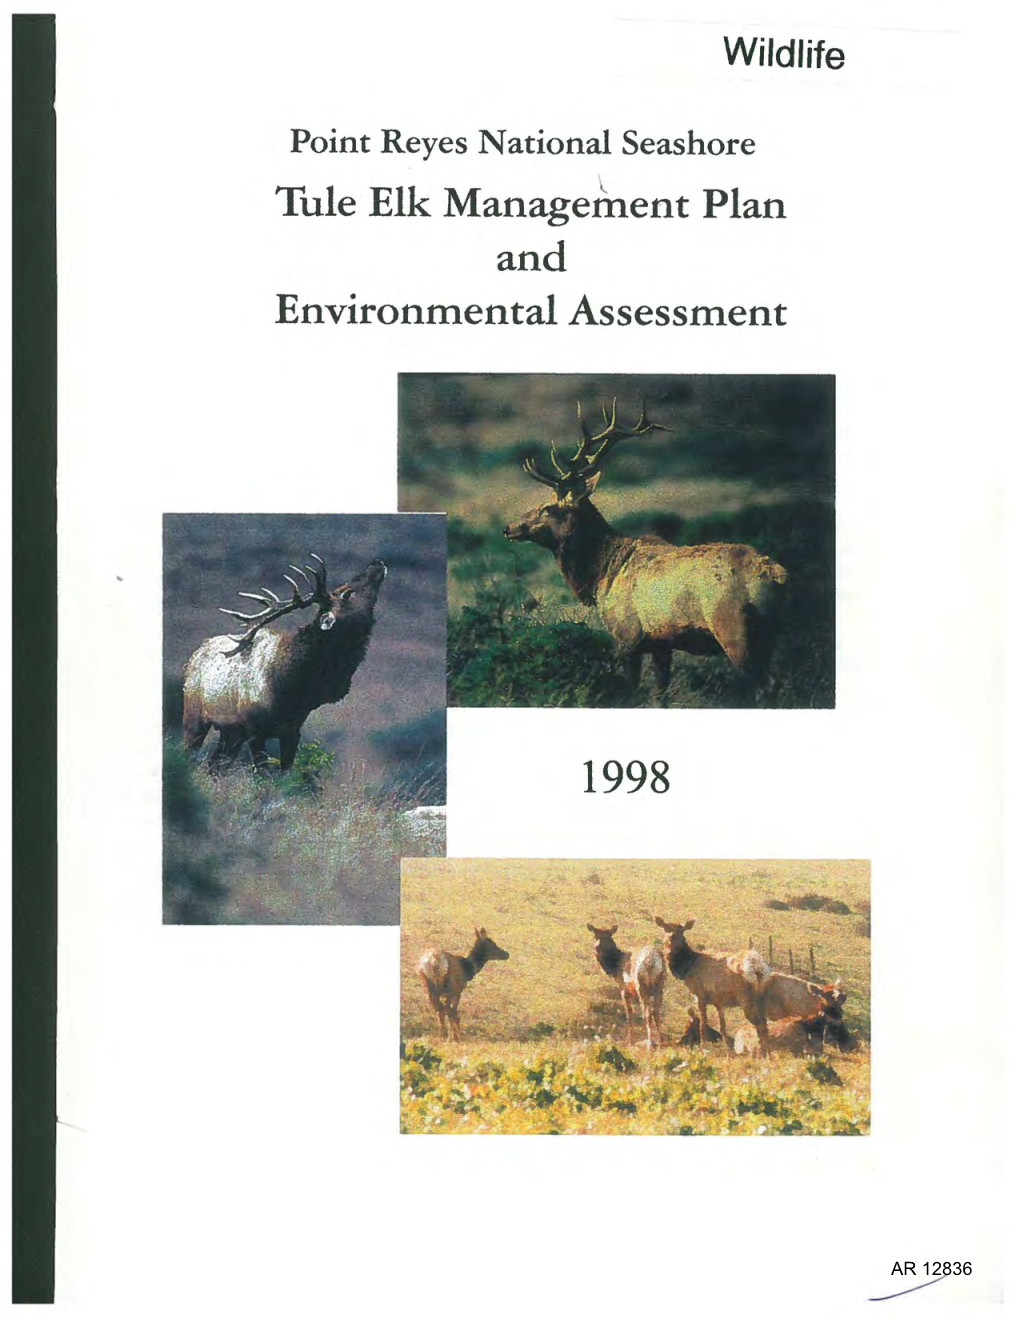 Tule Elk Management Plan and Environmental Assessment